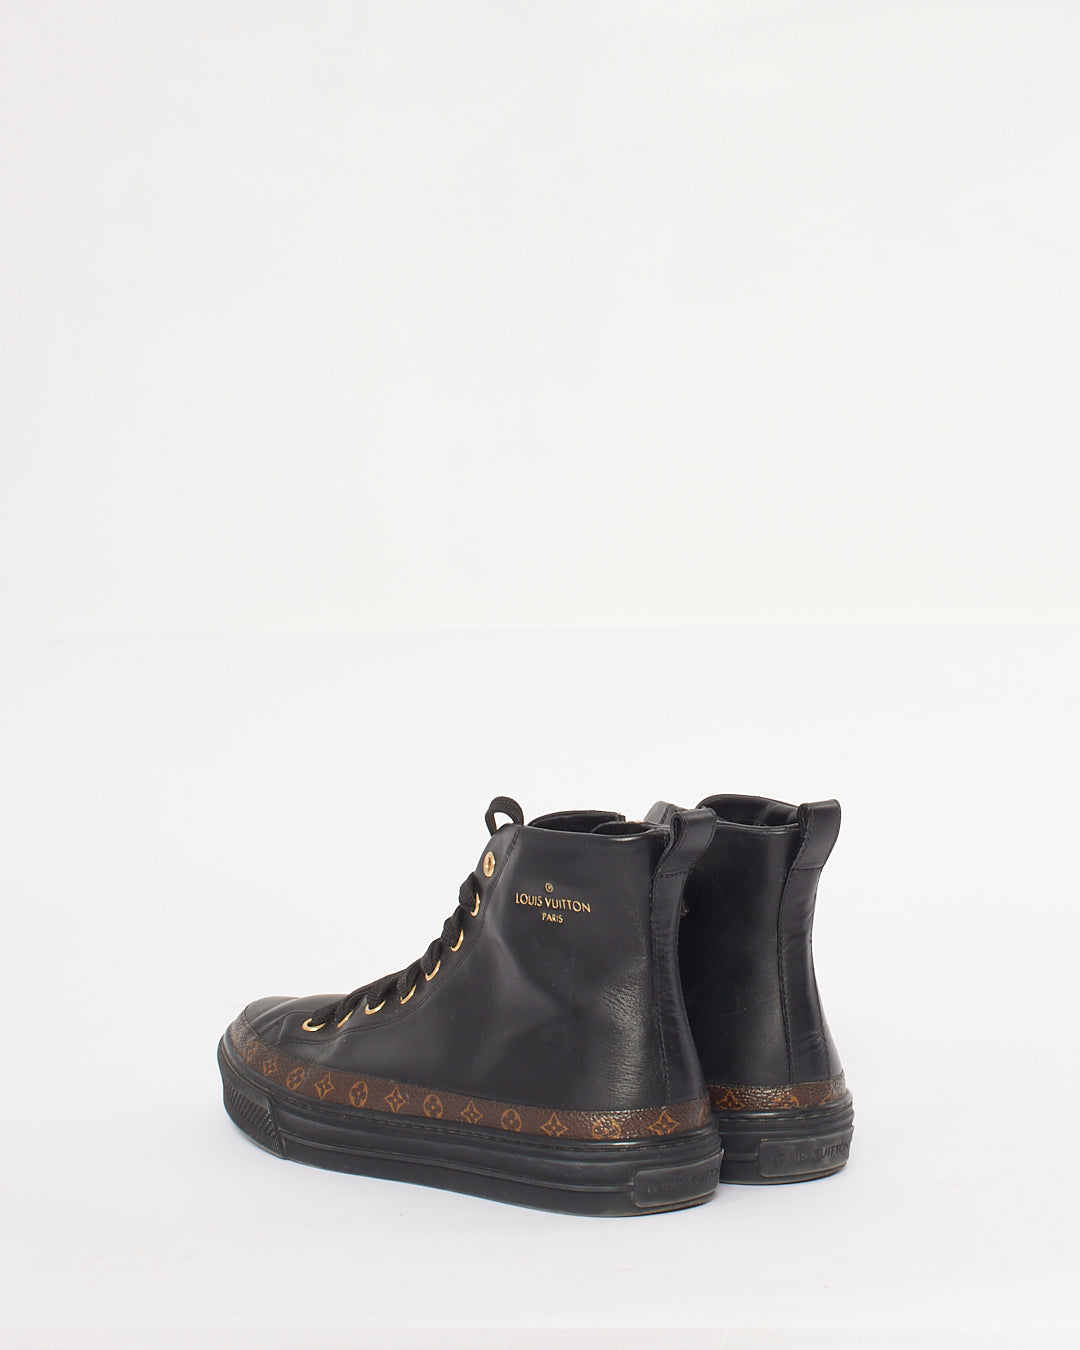 Louis Vuitton Black/Monogram Hightop Sneakers - 37.5